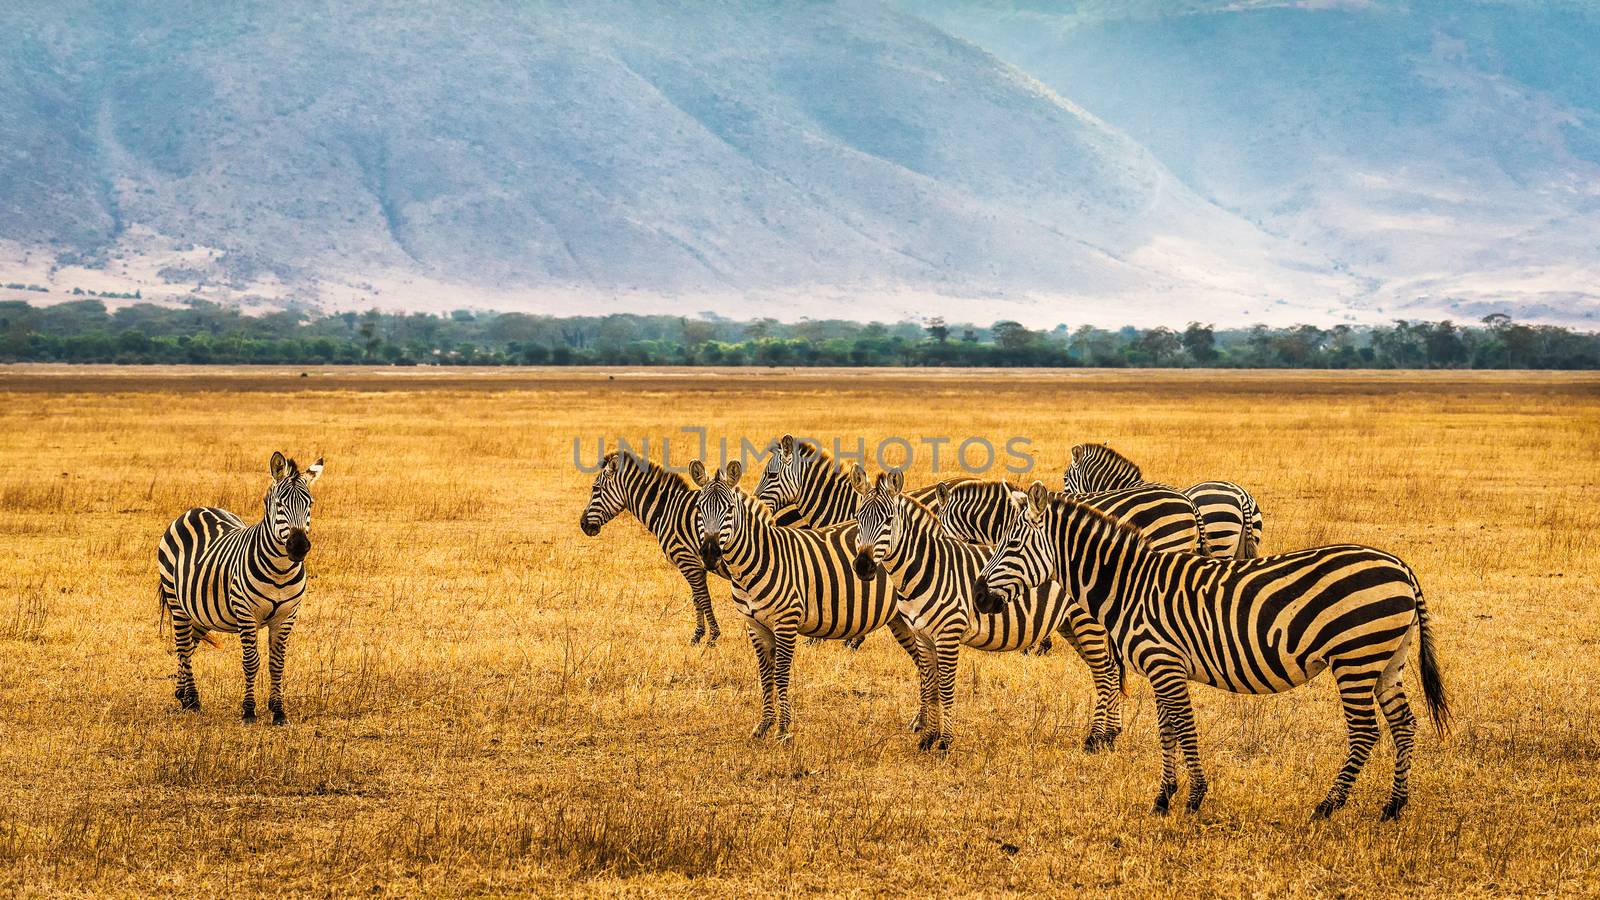 Herd of zebras in the Ngorongoro Crater by nickfox